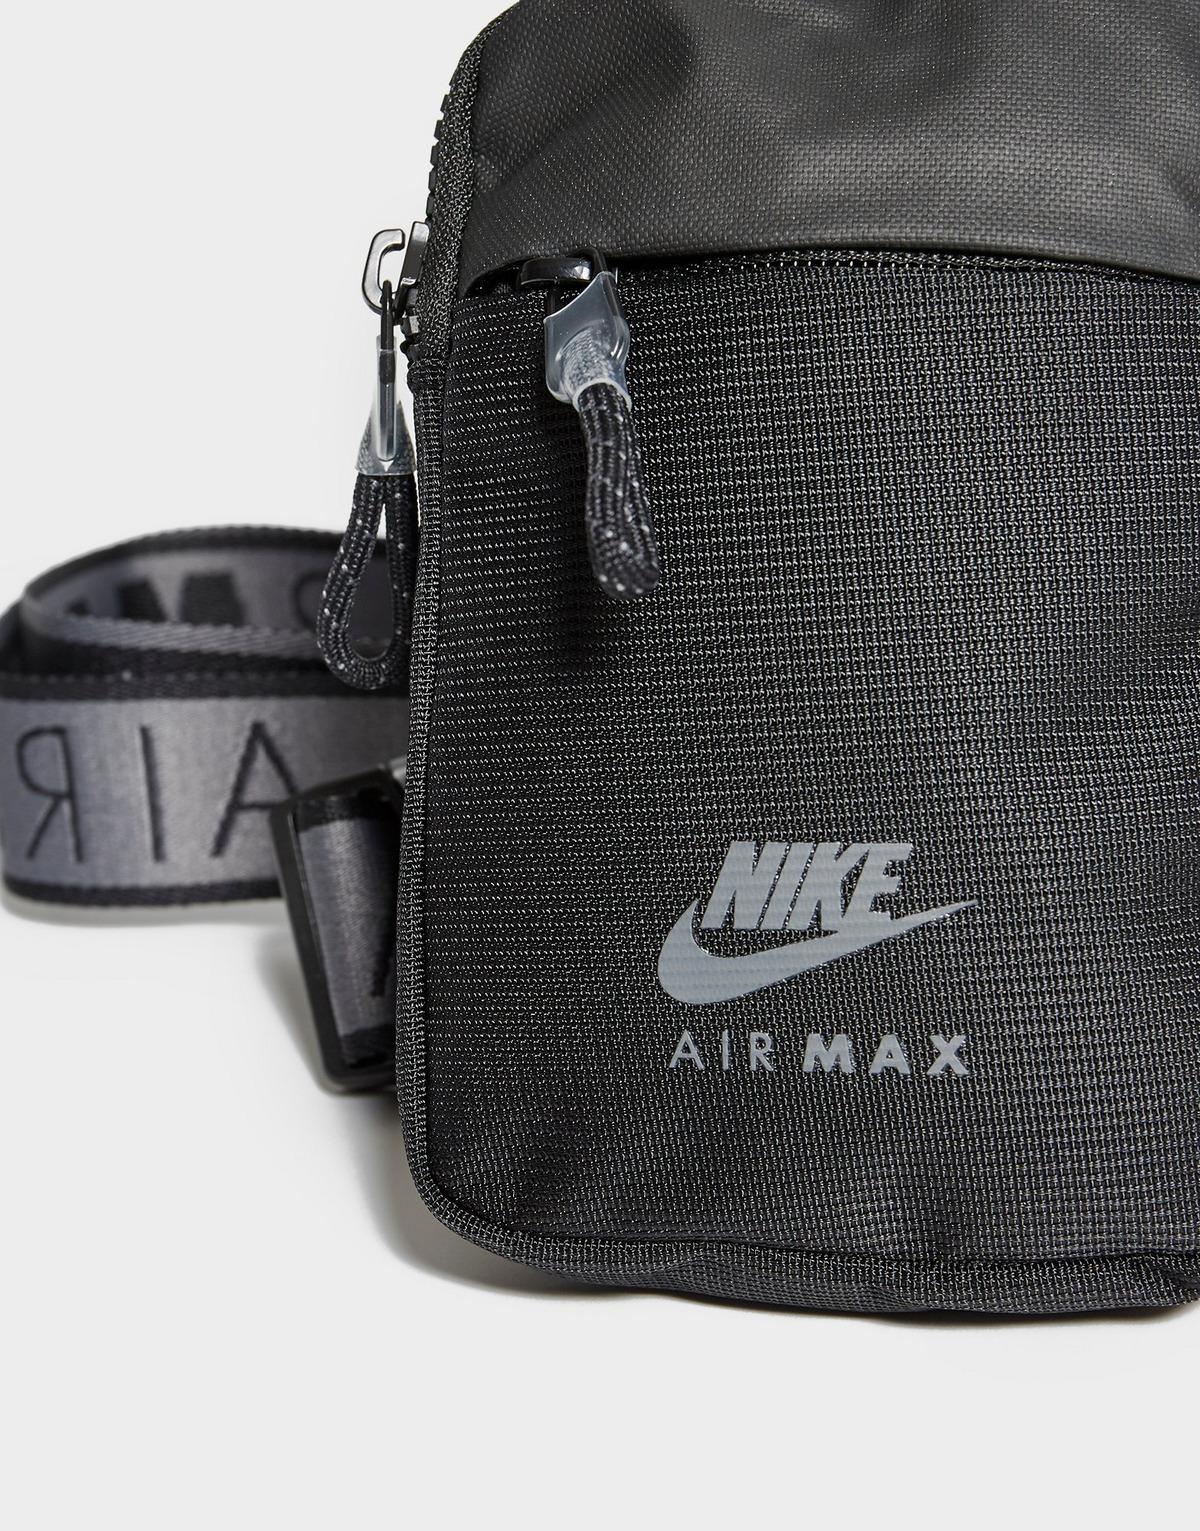 Essential Air Max Hip Pack in Black 